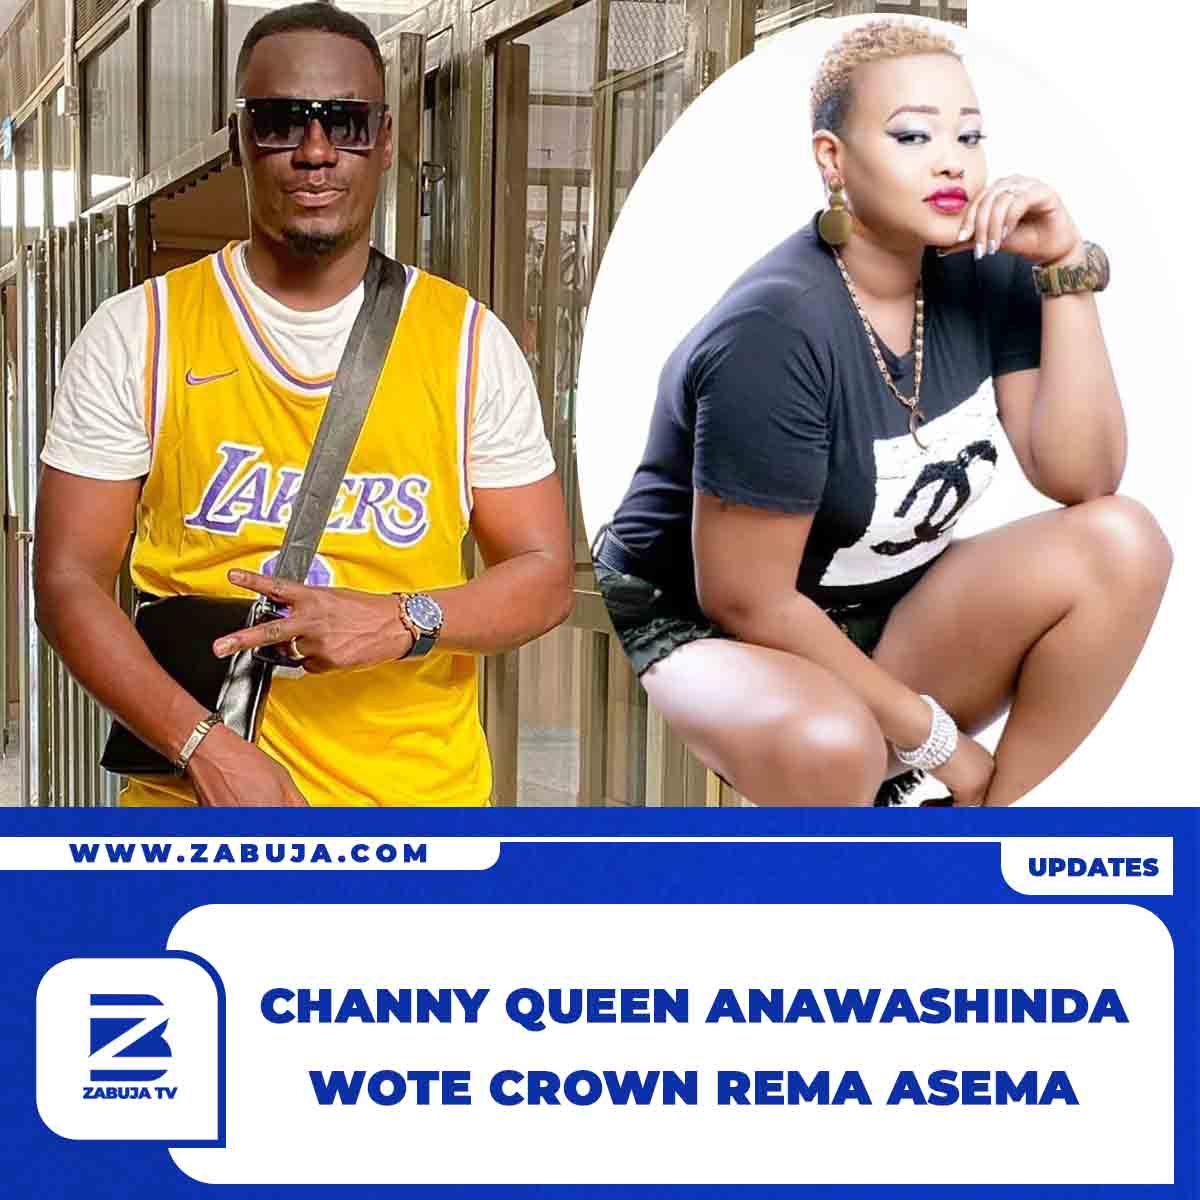 Channy Queen anawashinda wo Crown Rema asema